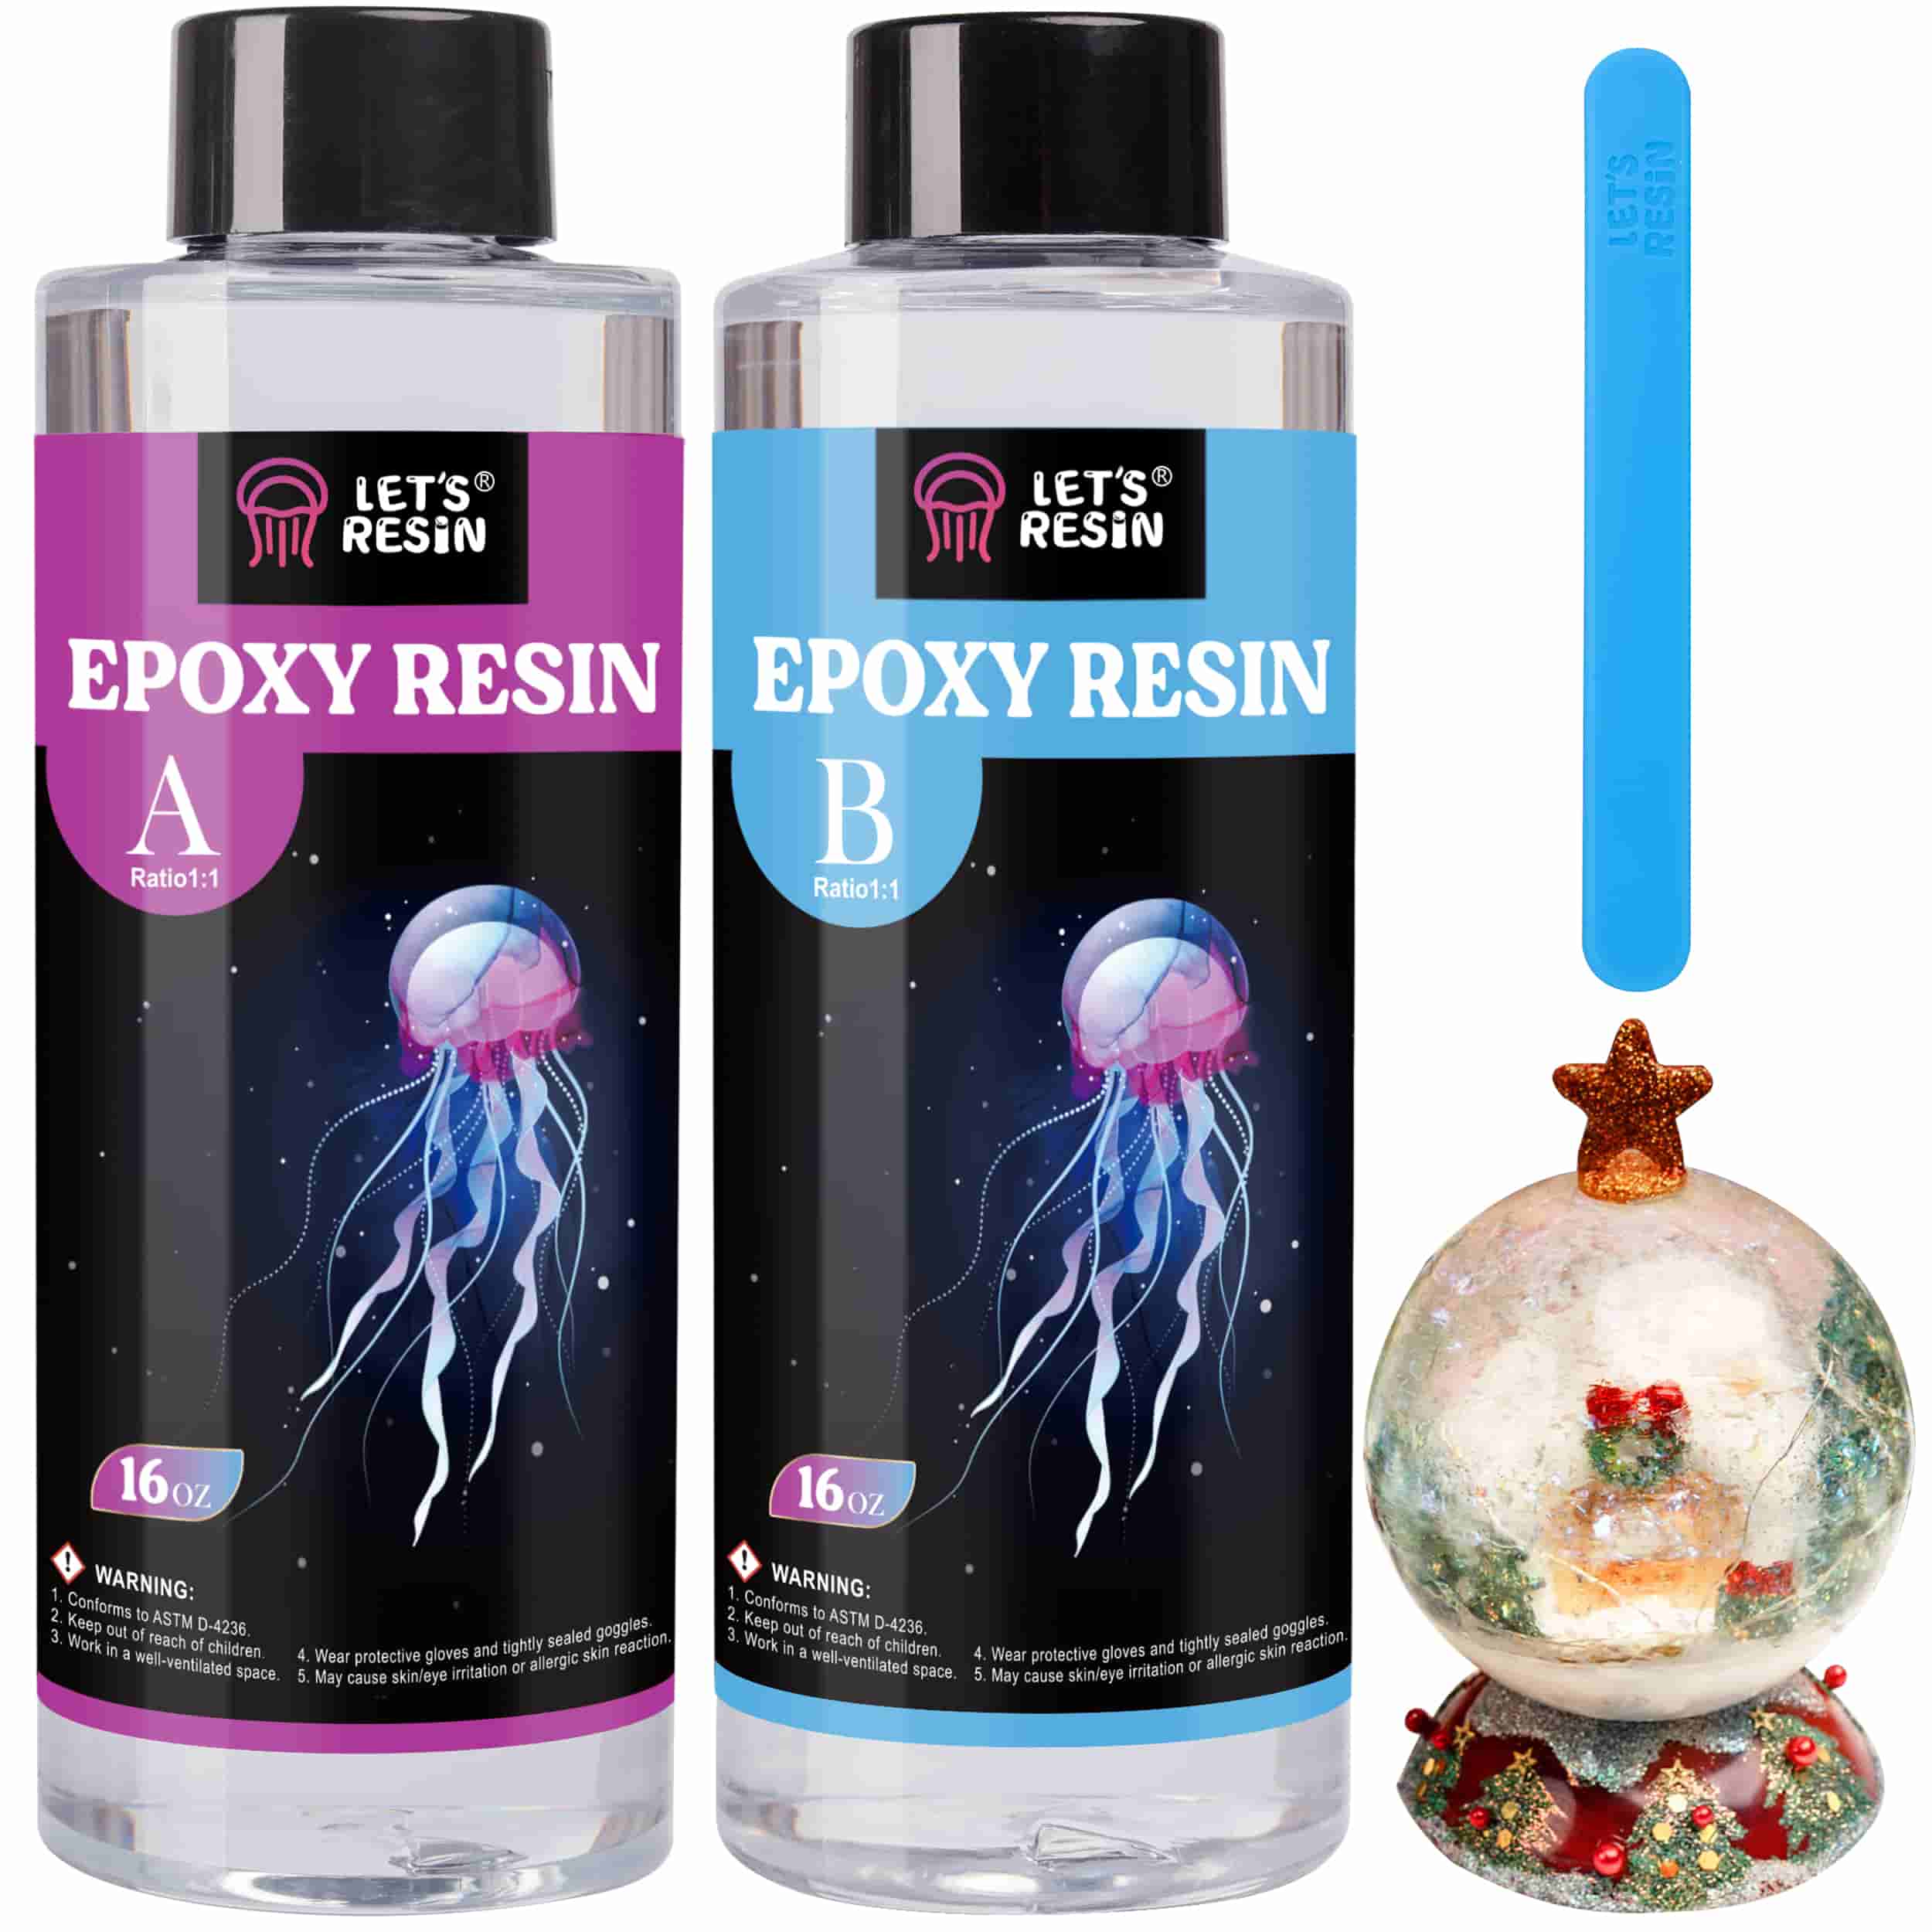  LET'S RESIN Epoxy Resin,Resin Coaster Molds Kit,16oz